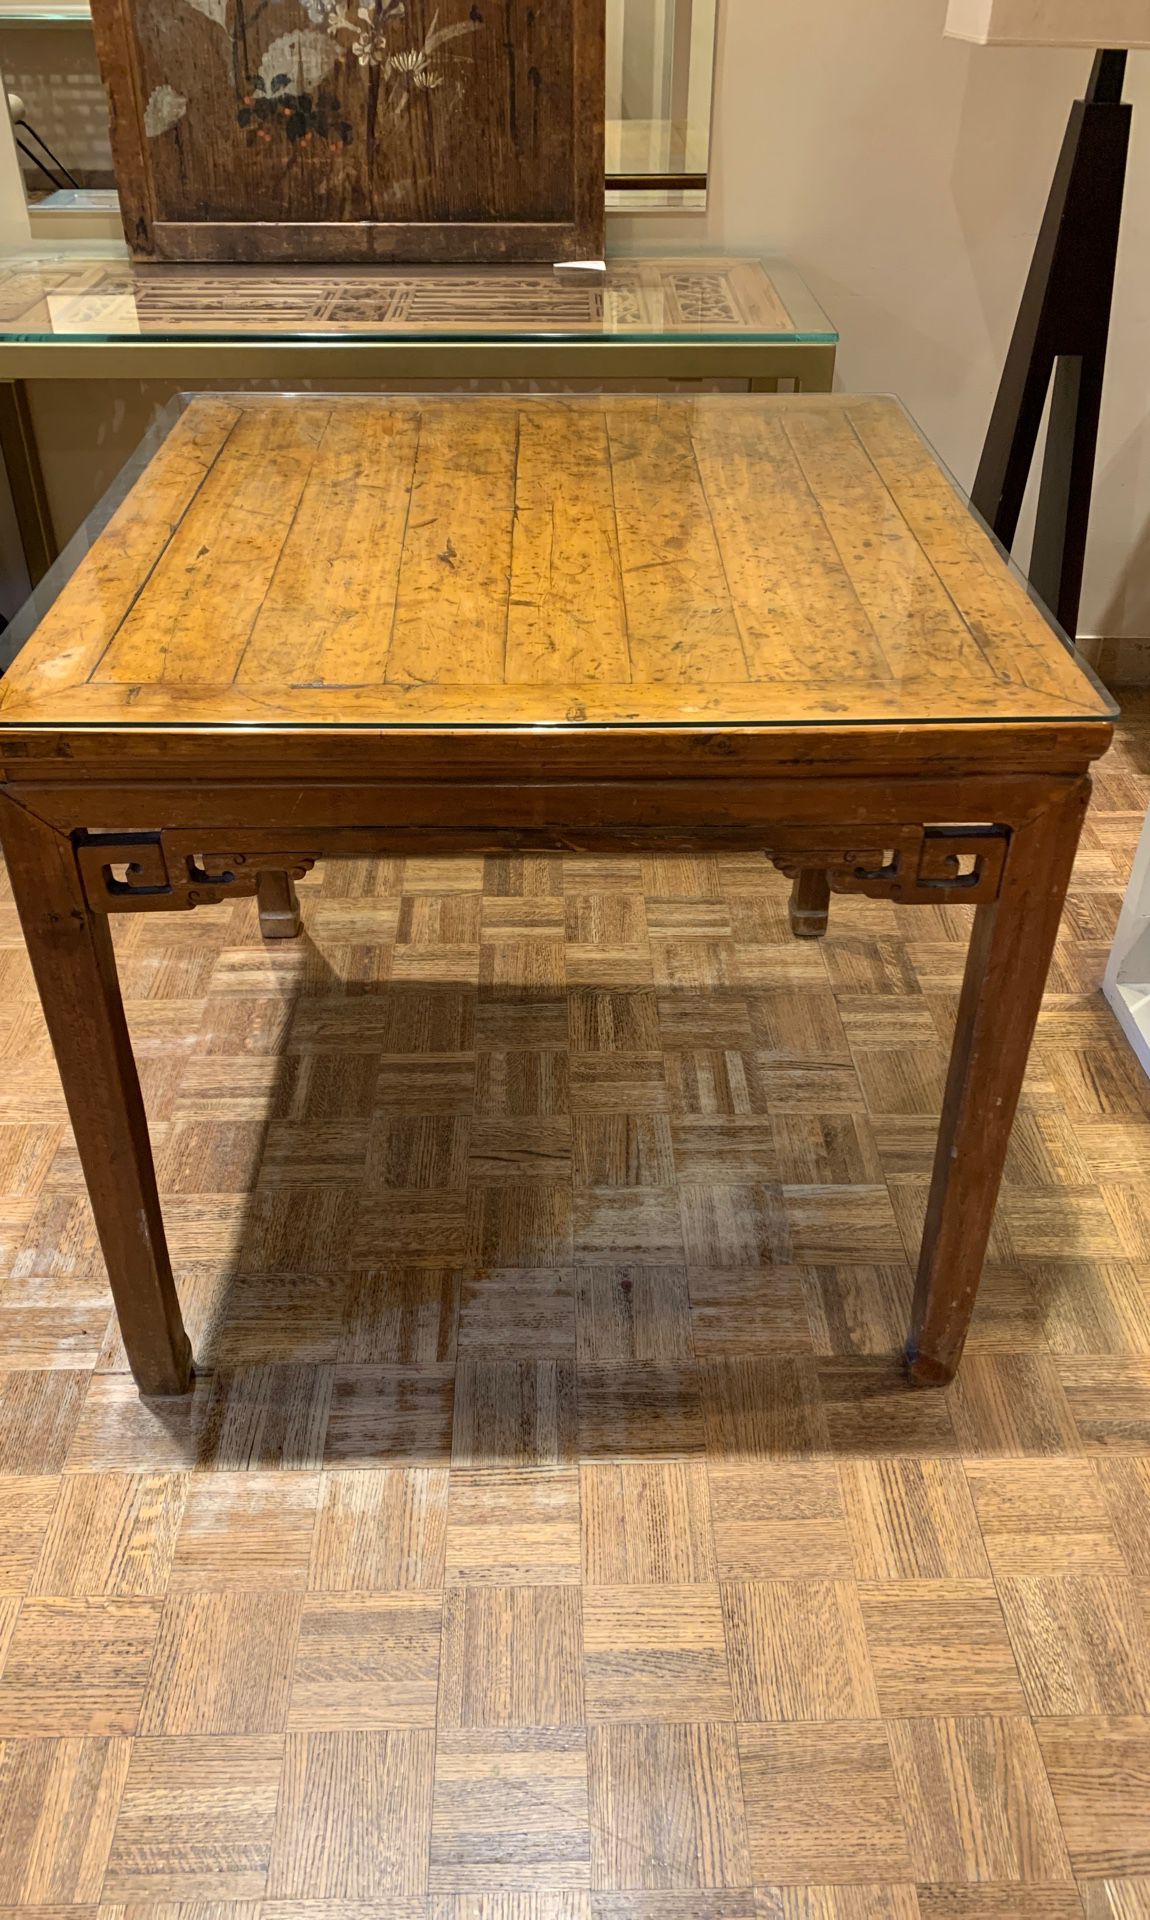 Large square antique table